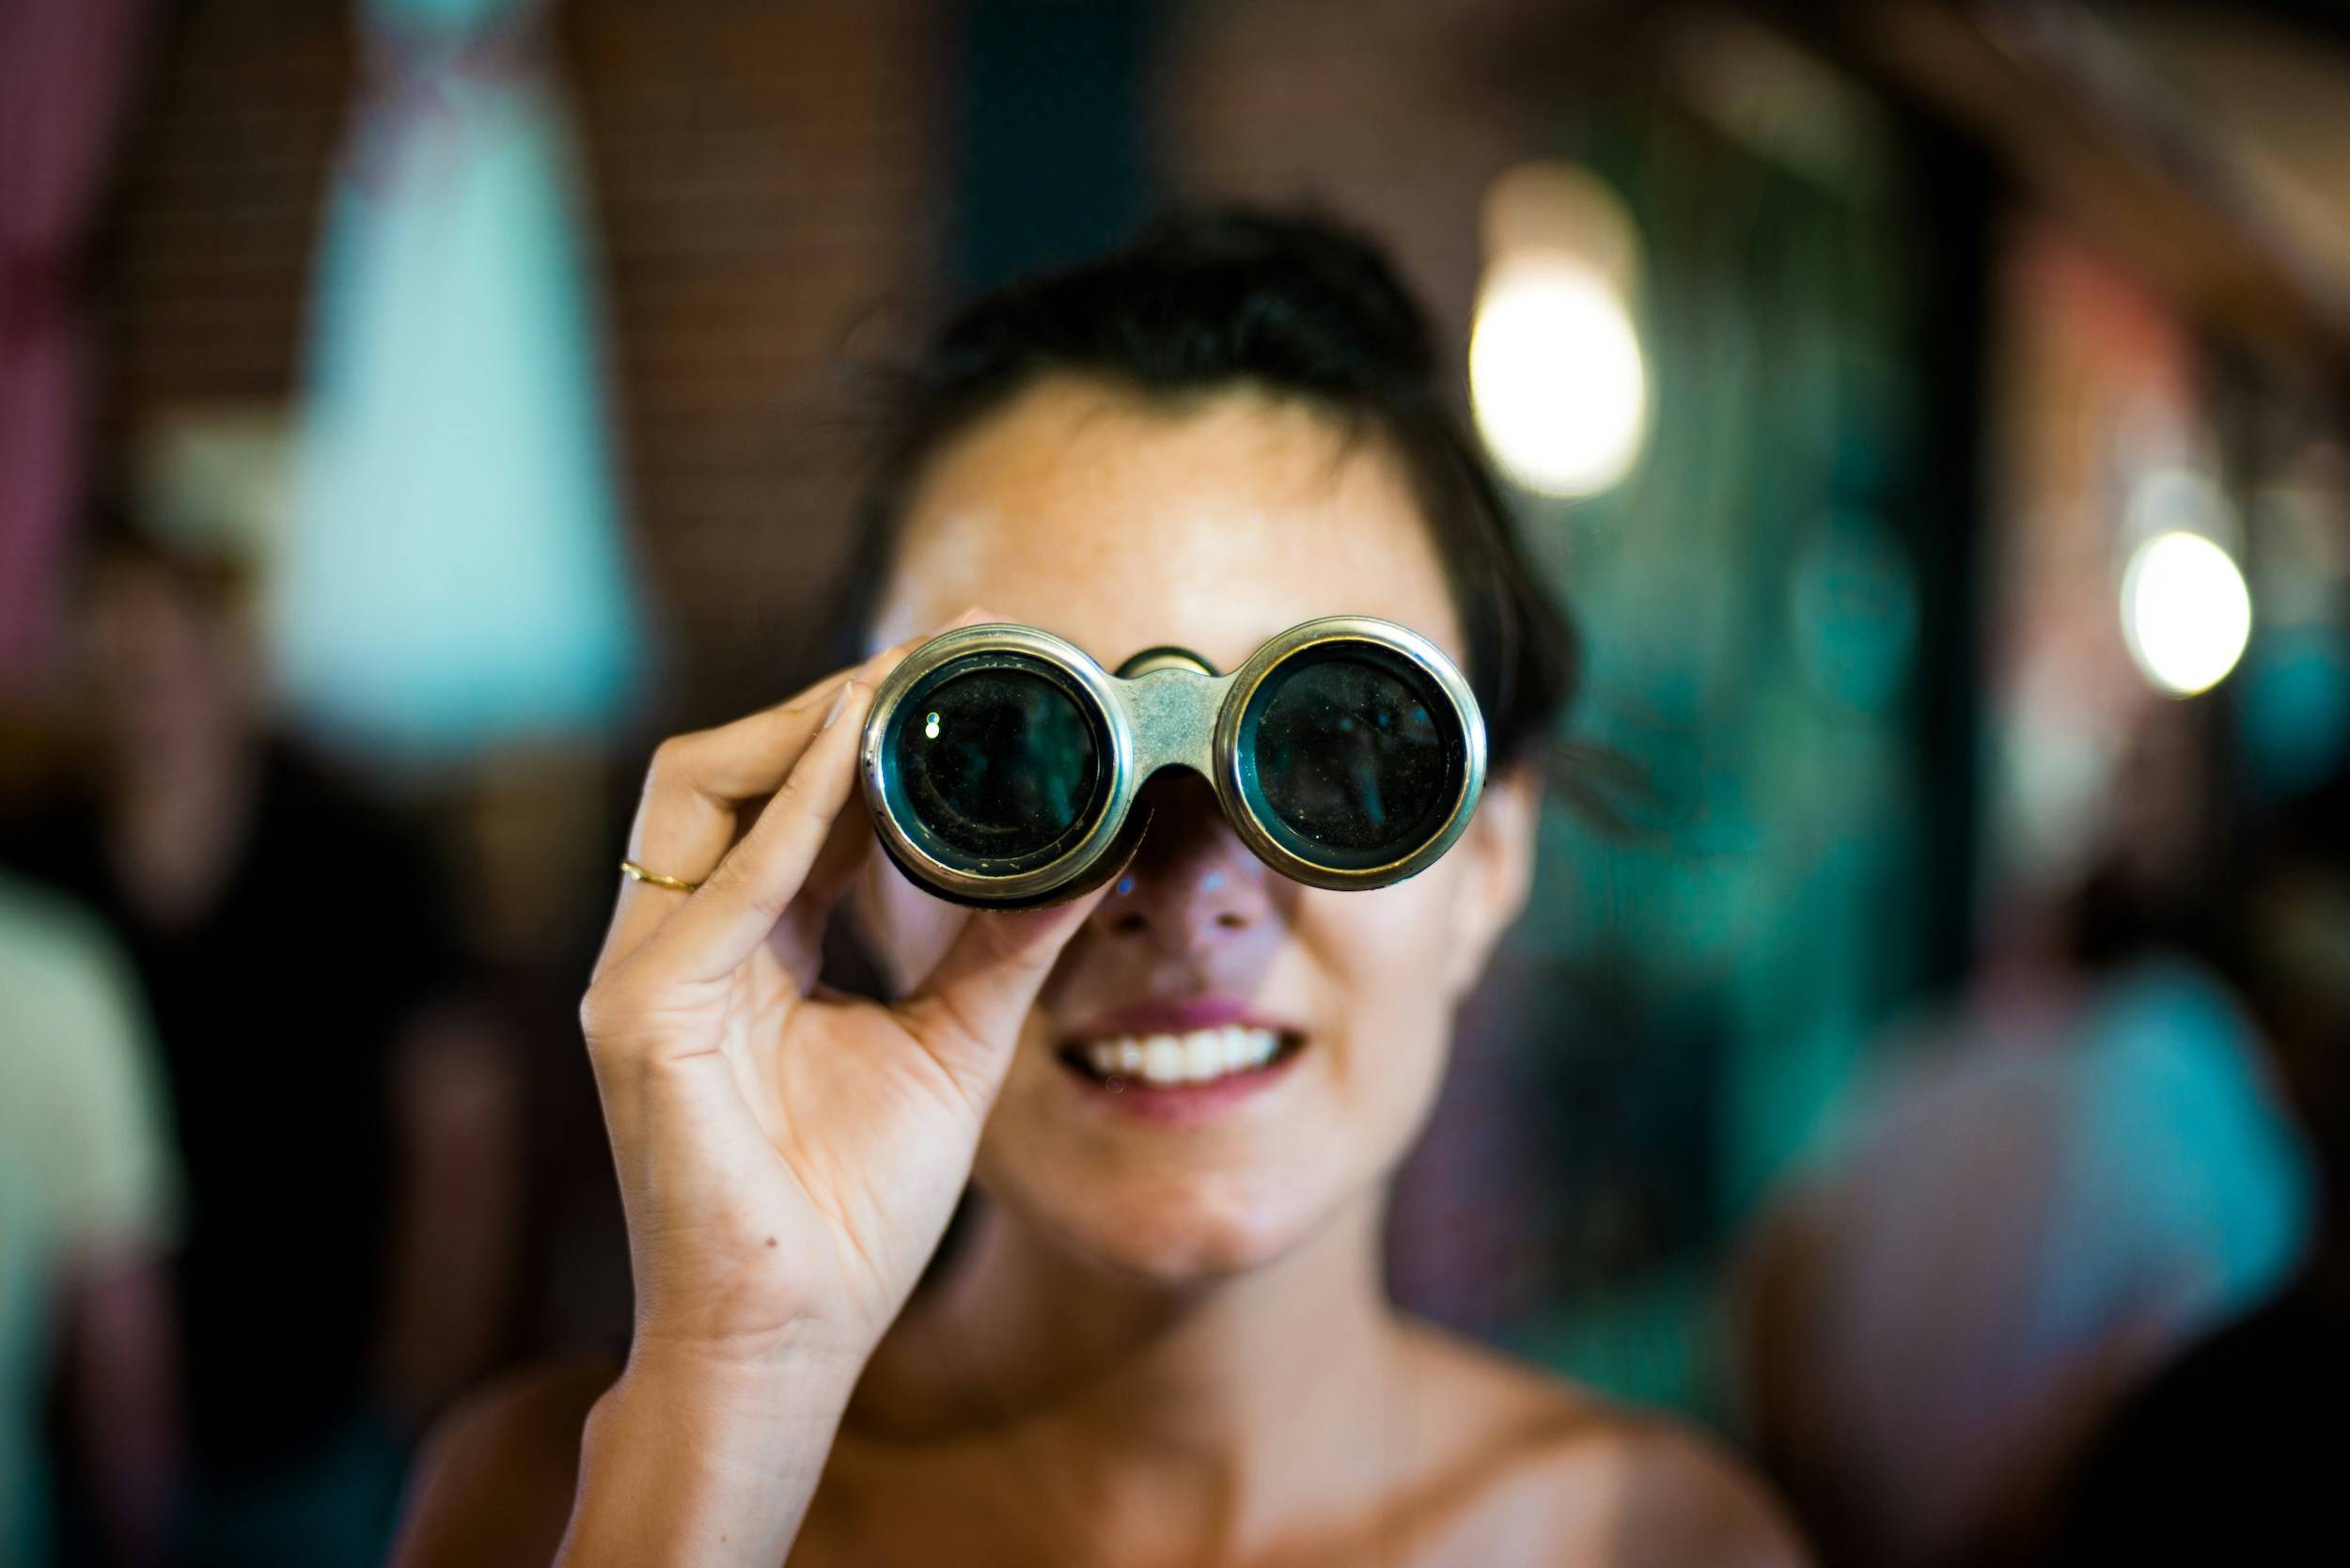 Strategies for nurturing curiosity. Adult with binoculars